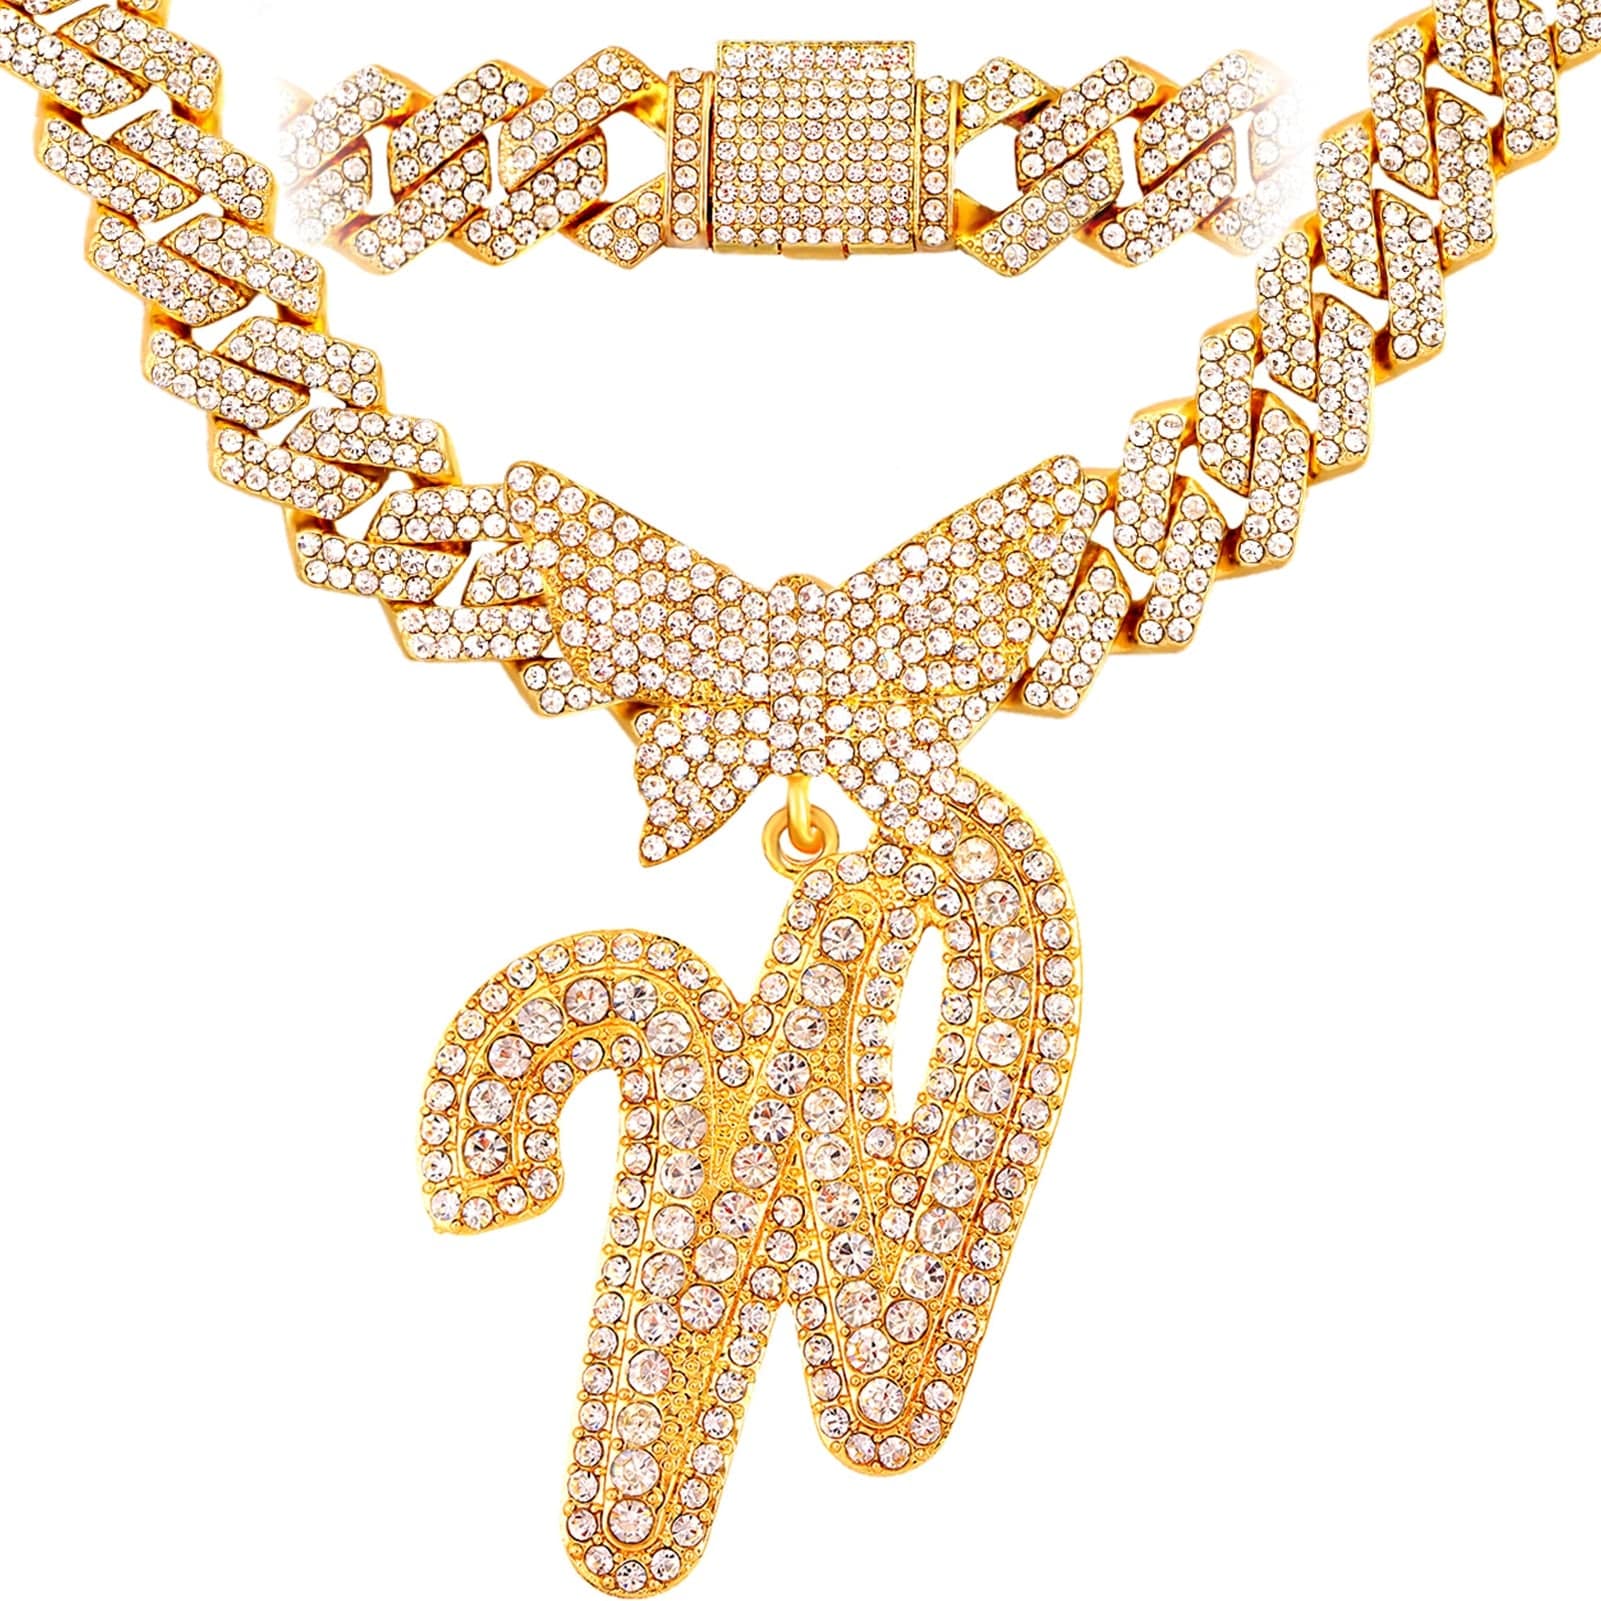 VVS Jewelry hip hop jewelry W / Gold Bling Butterfly Letter Cuban Link Chain